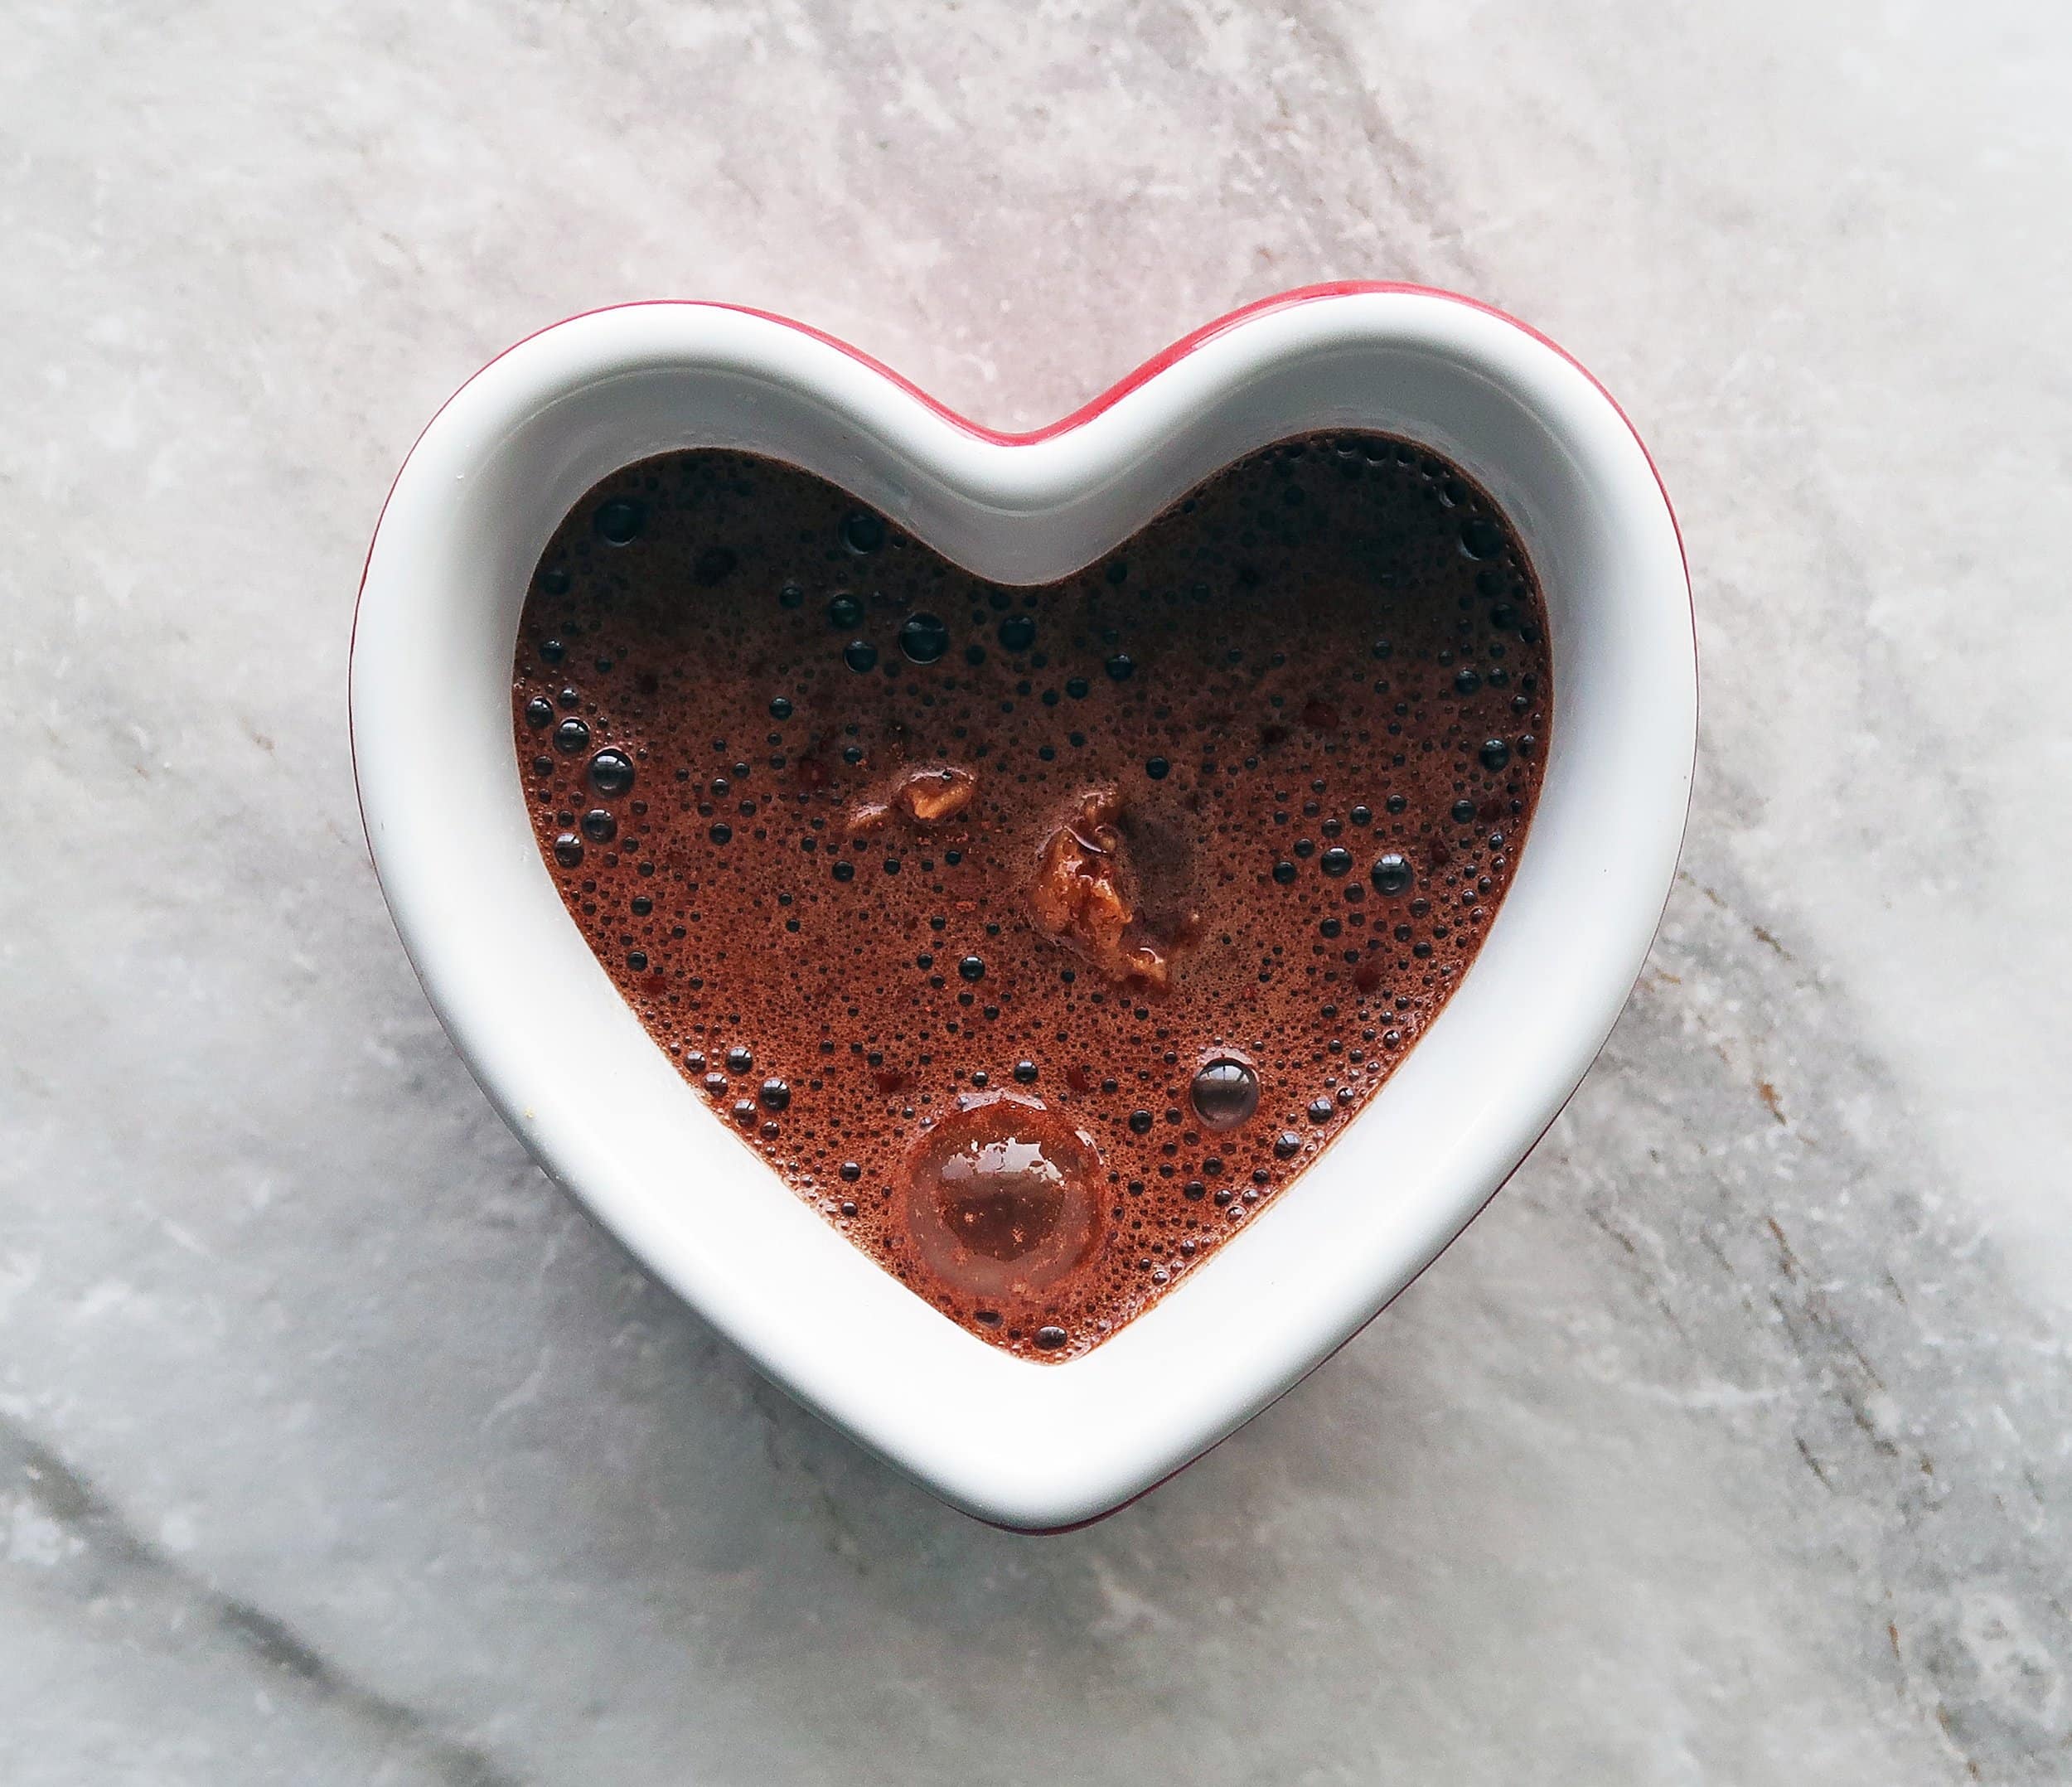 Chocolate cake batter in a heart-shaped ramekin.